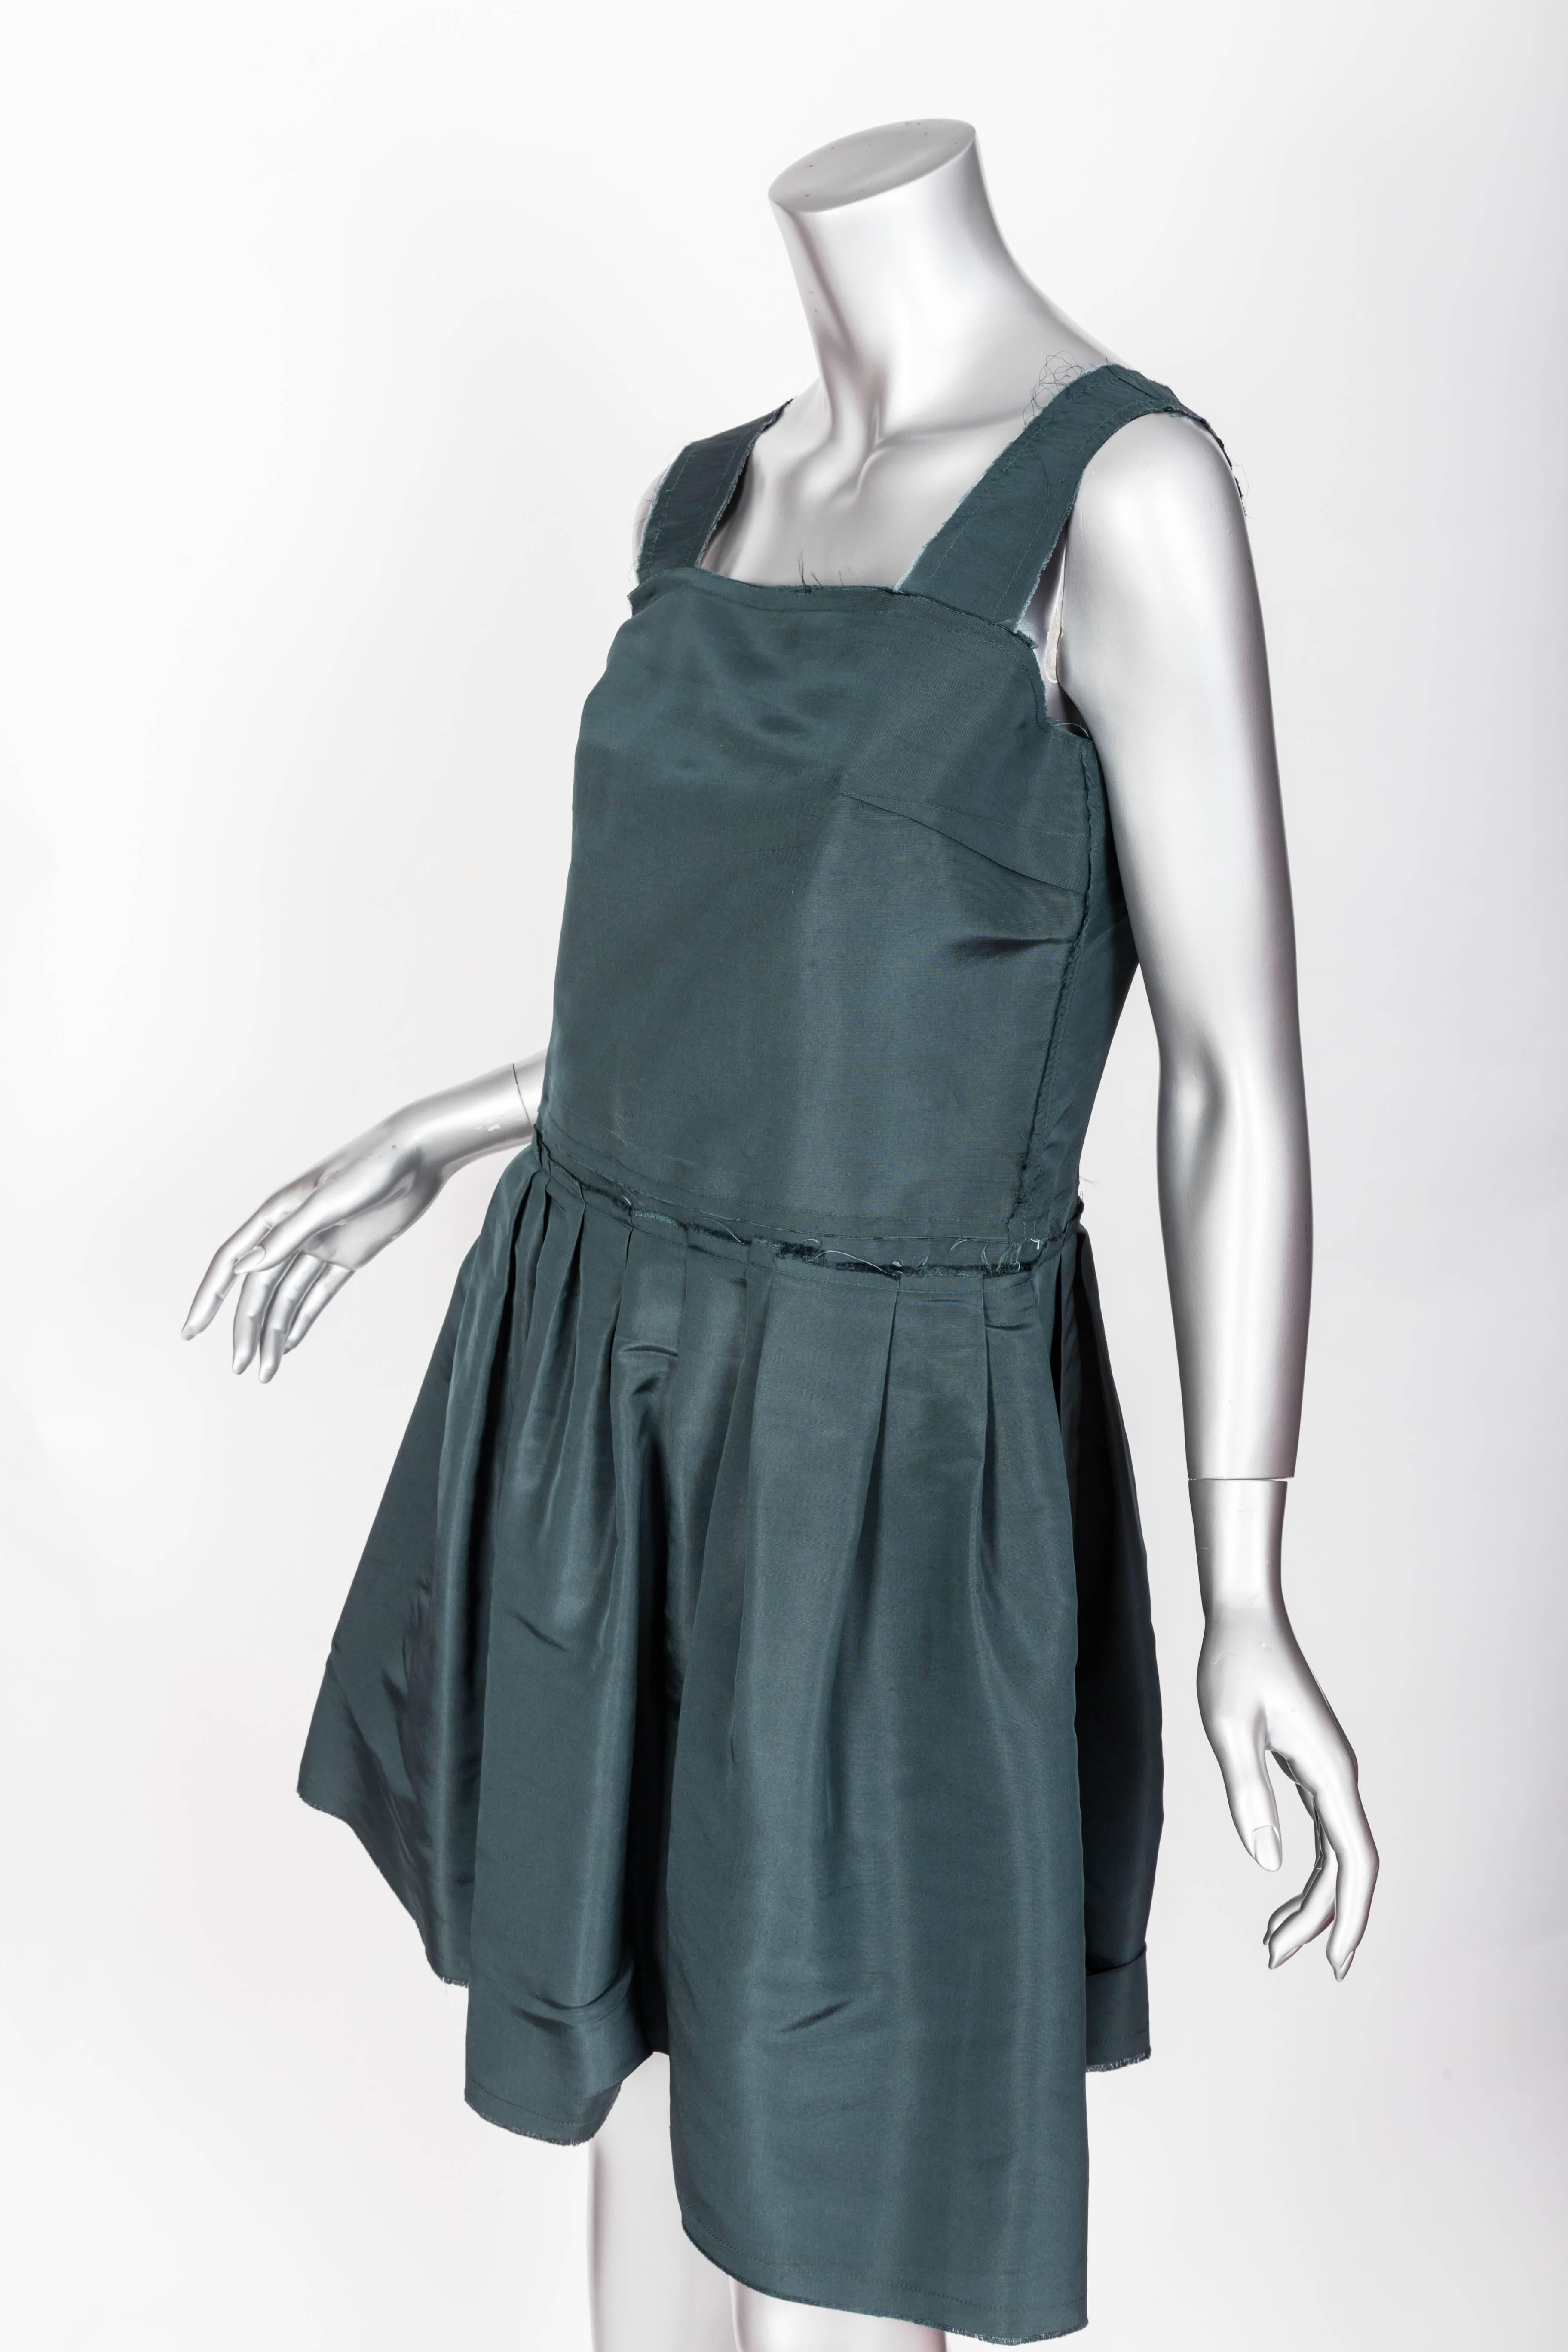 Women's Lanvin Green Silk Taffeta Dress - Size 40